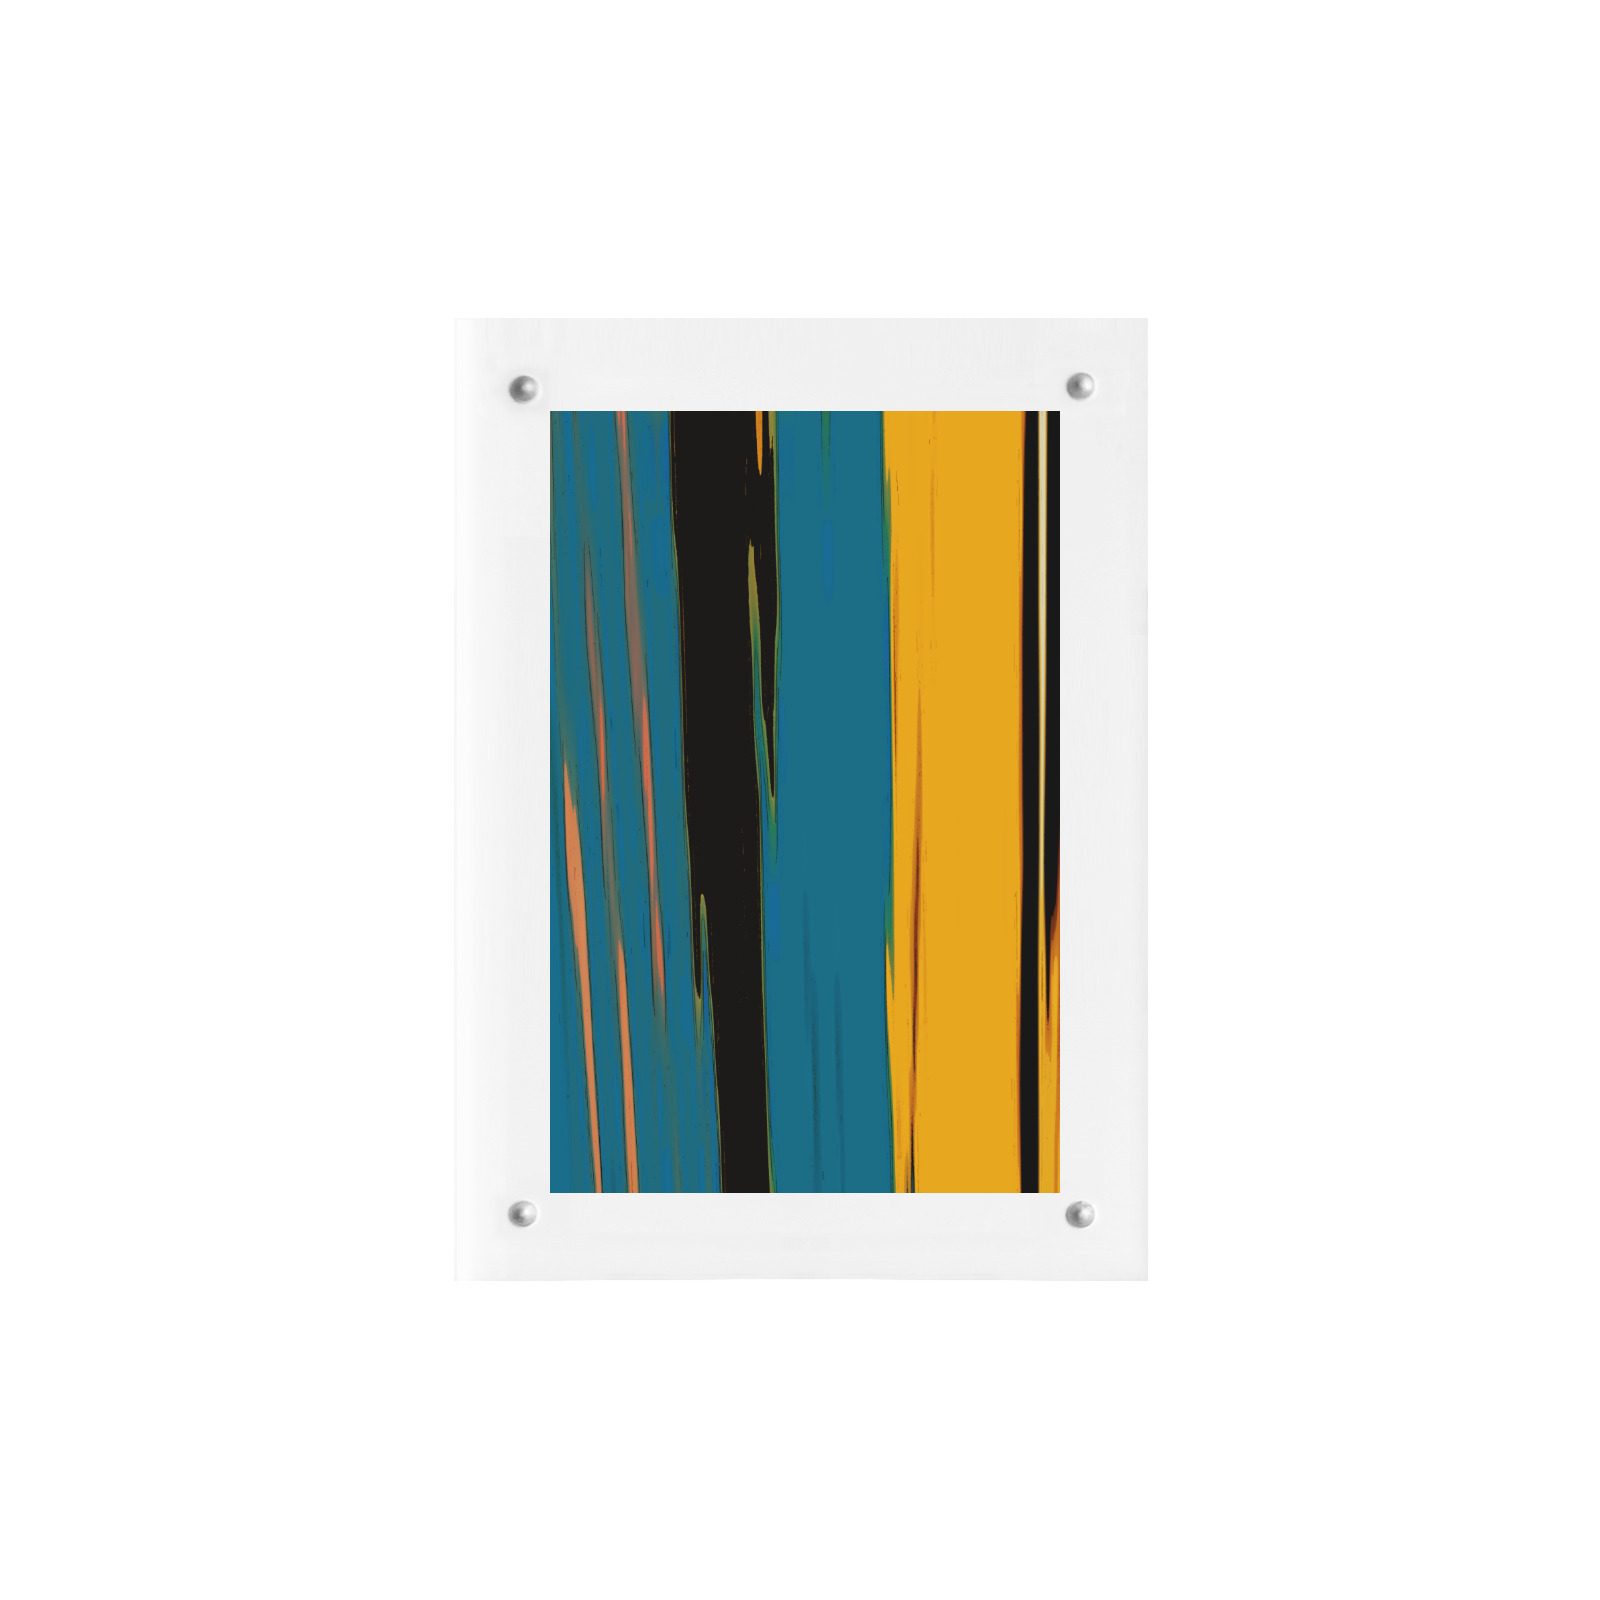 Black Turquoise And Orange Go! Abstract Art Acrylic Magnetic Photo Frame 5"x7"